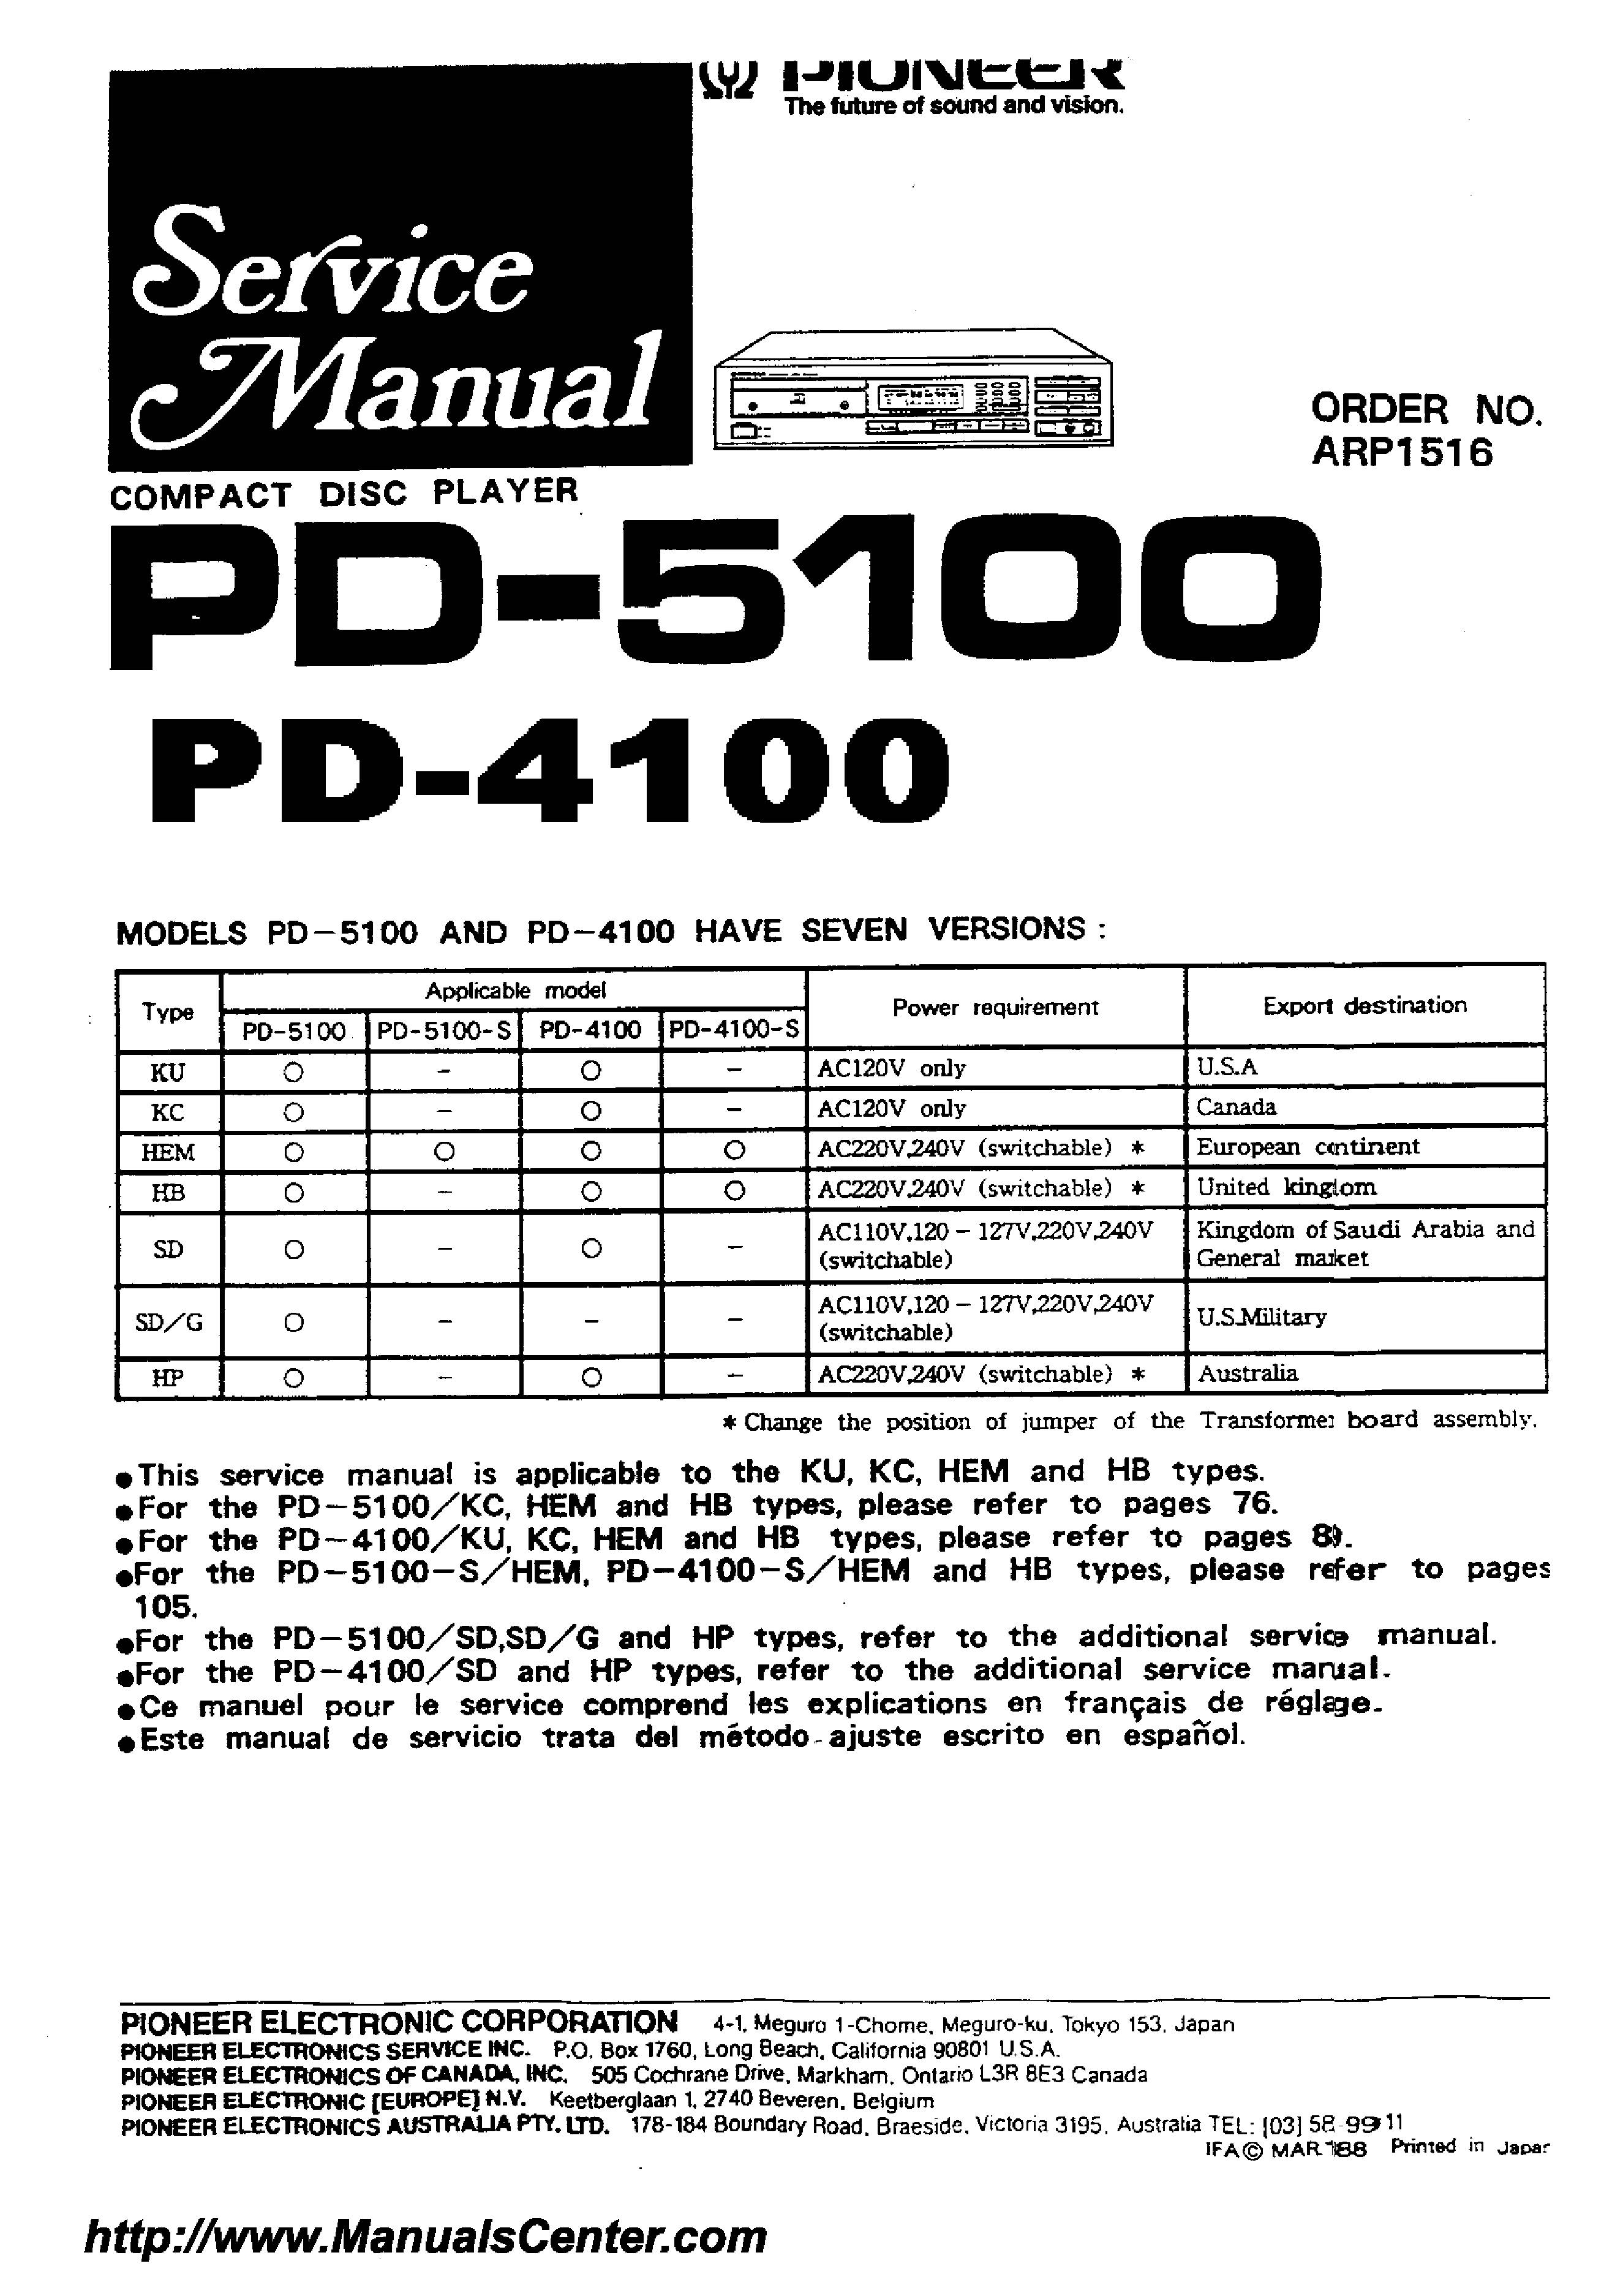 Pioneer PD-4100